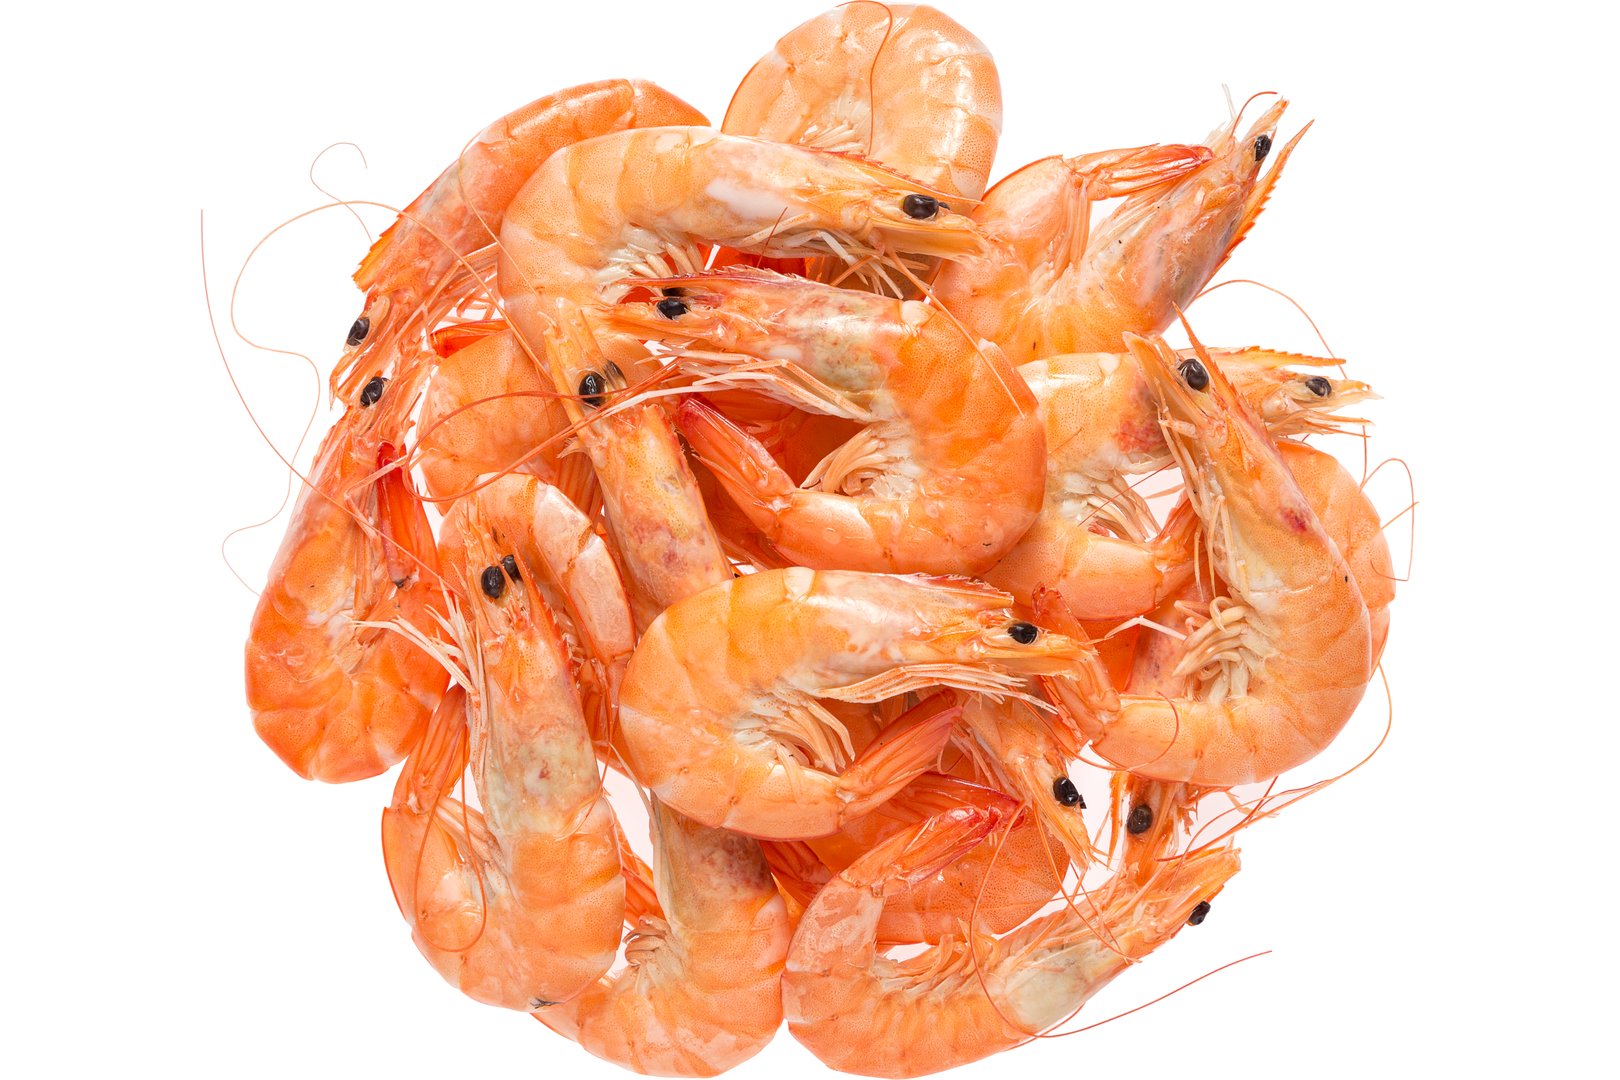 Photo Chilled shrimp